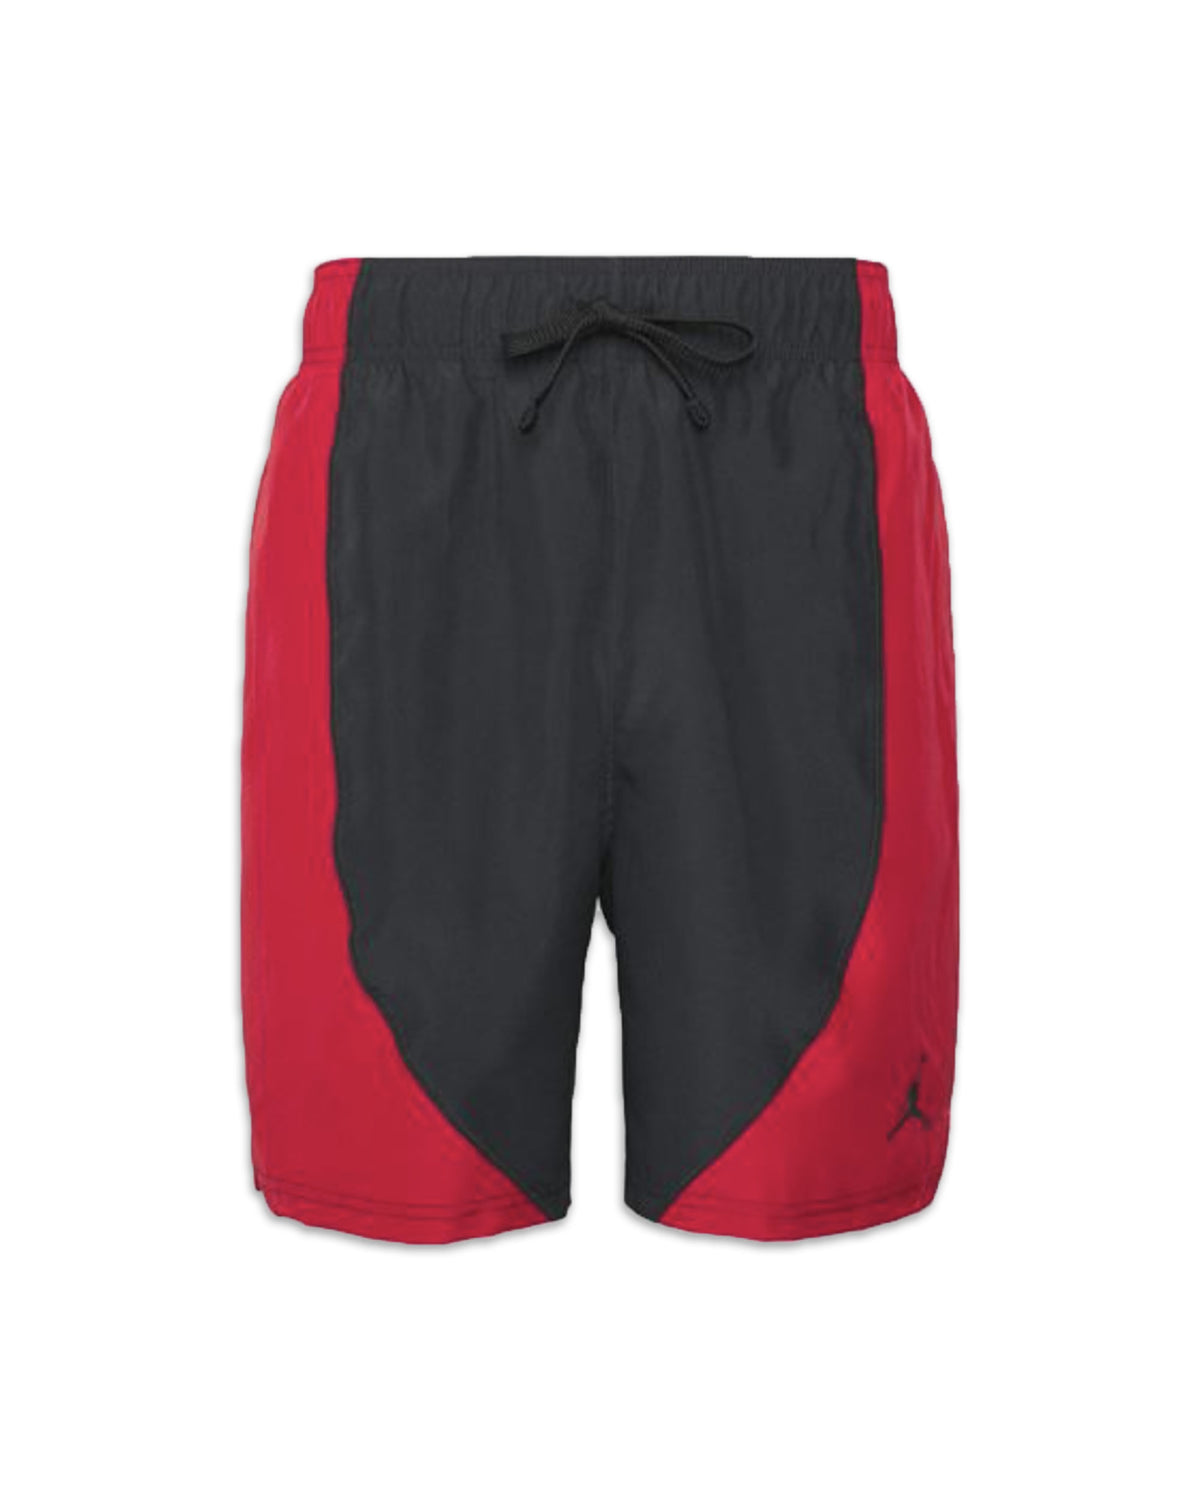 Short Nike Jordan Black Red